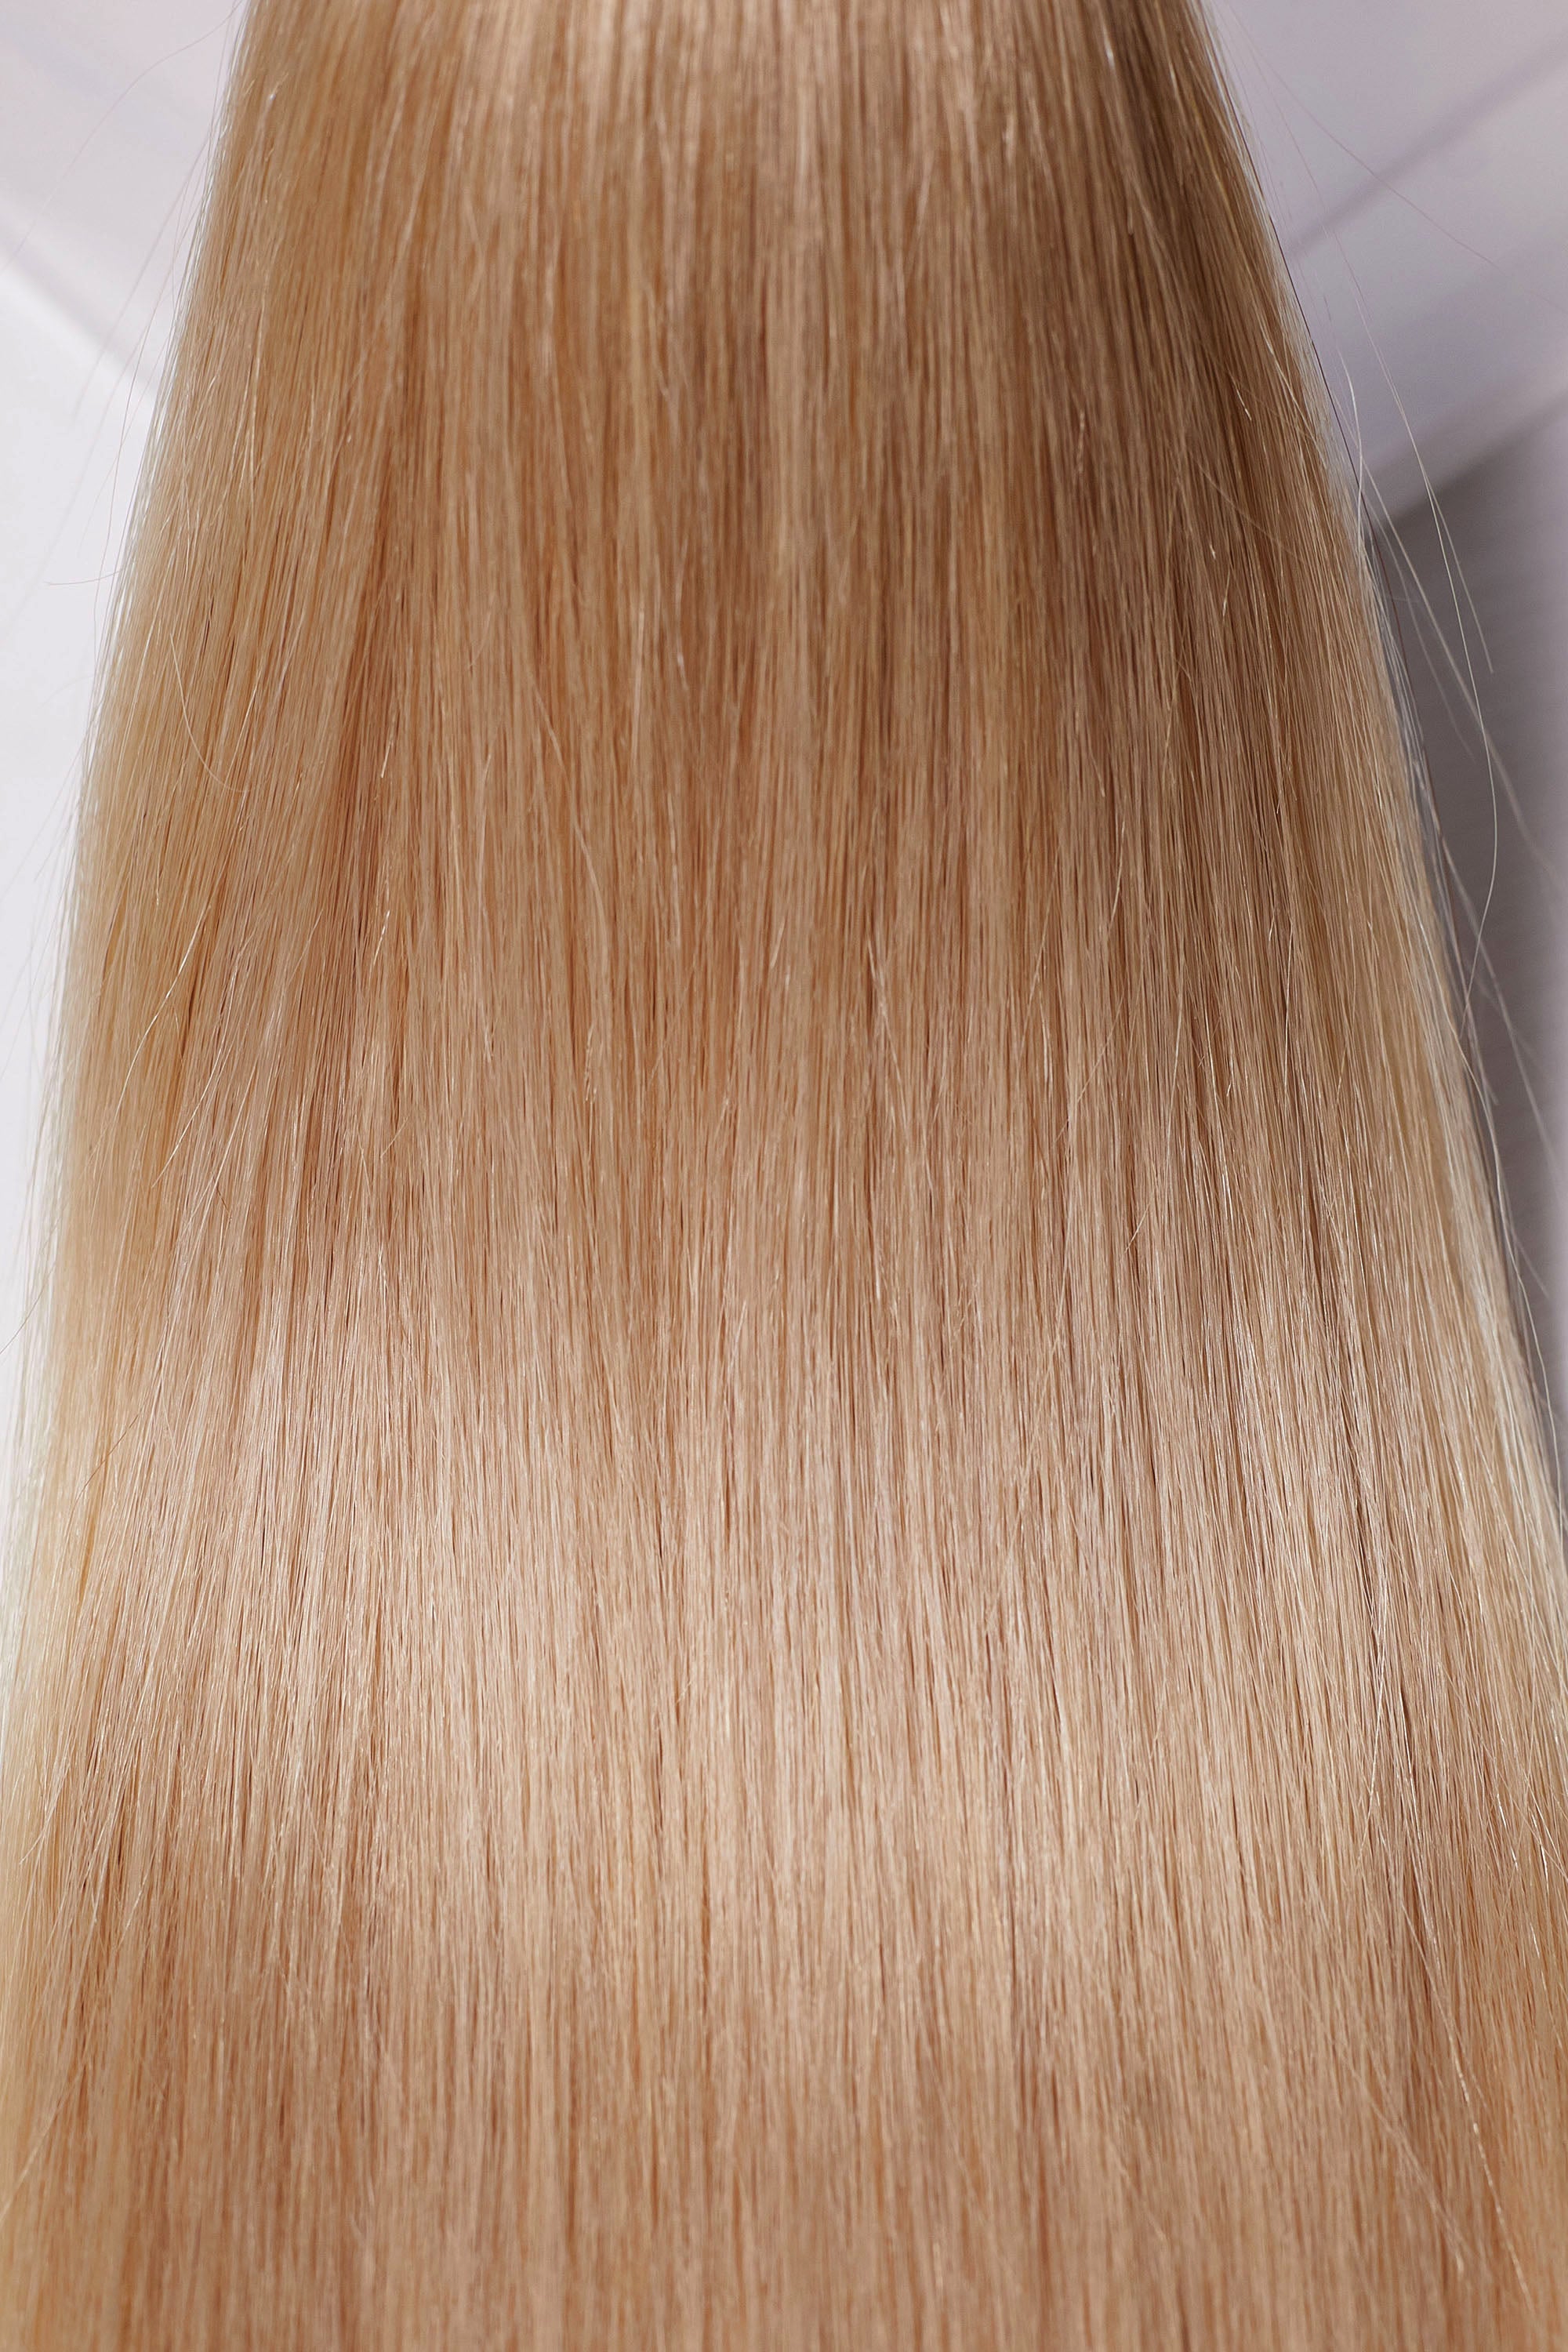 Behair professional Keratin Tip "Premium" 28" (70cm) Natural Straight Light Gold Sand #16 - 25g (1g each pcs) hair extensions